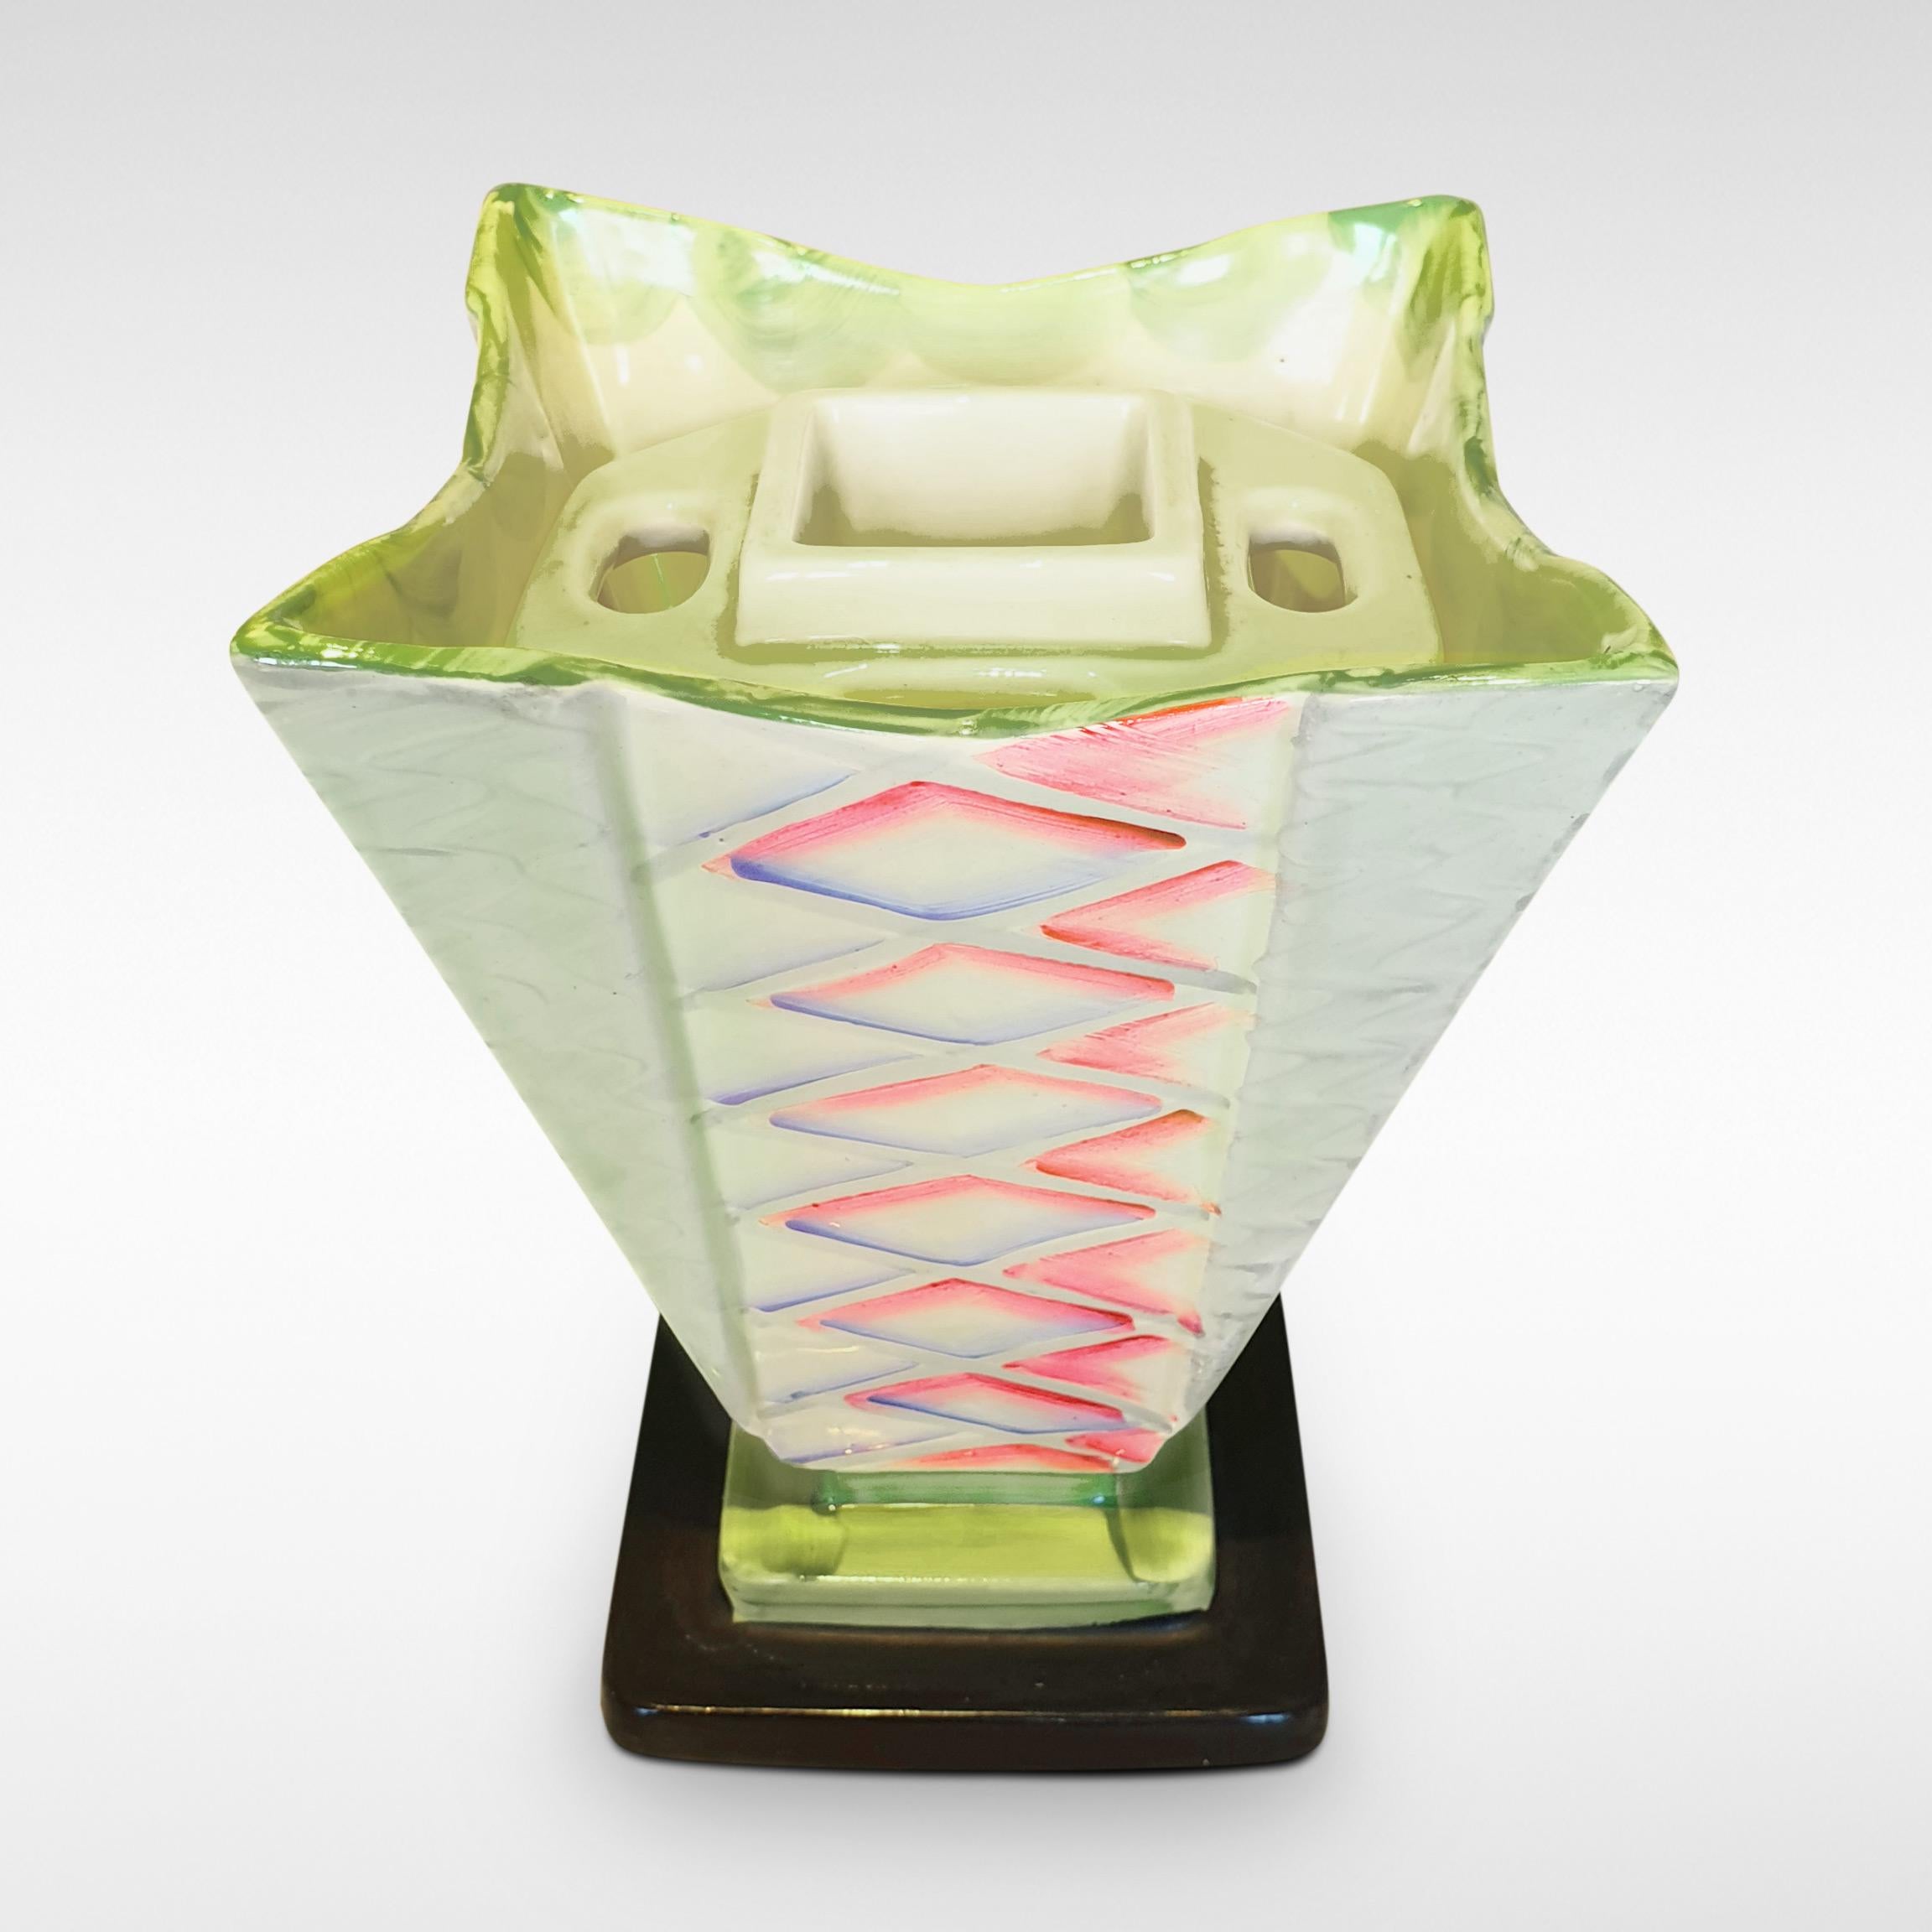 English Art Deco Square Vase by Myott Son & Co